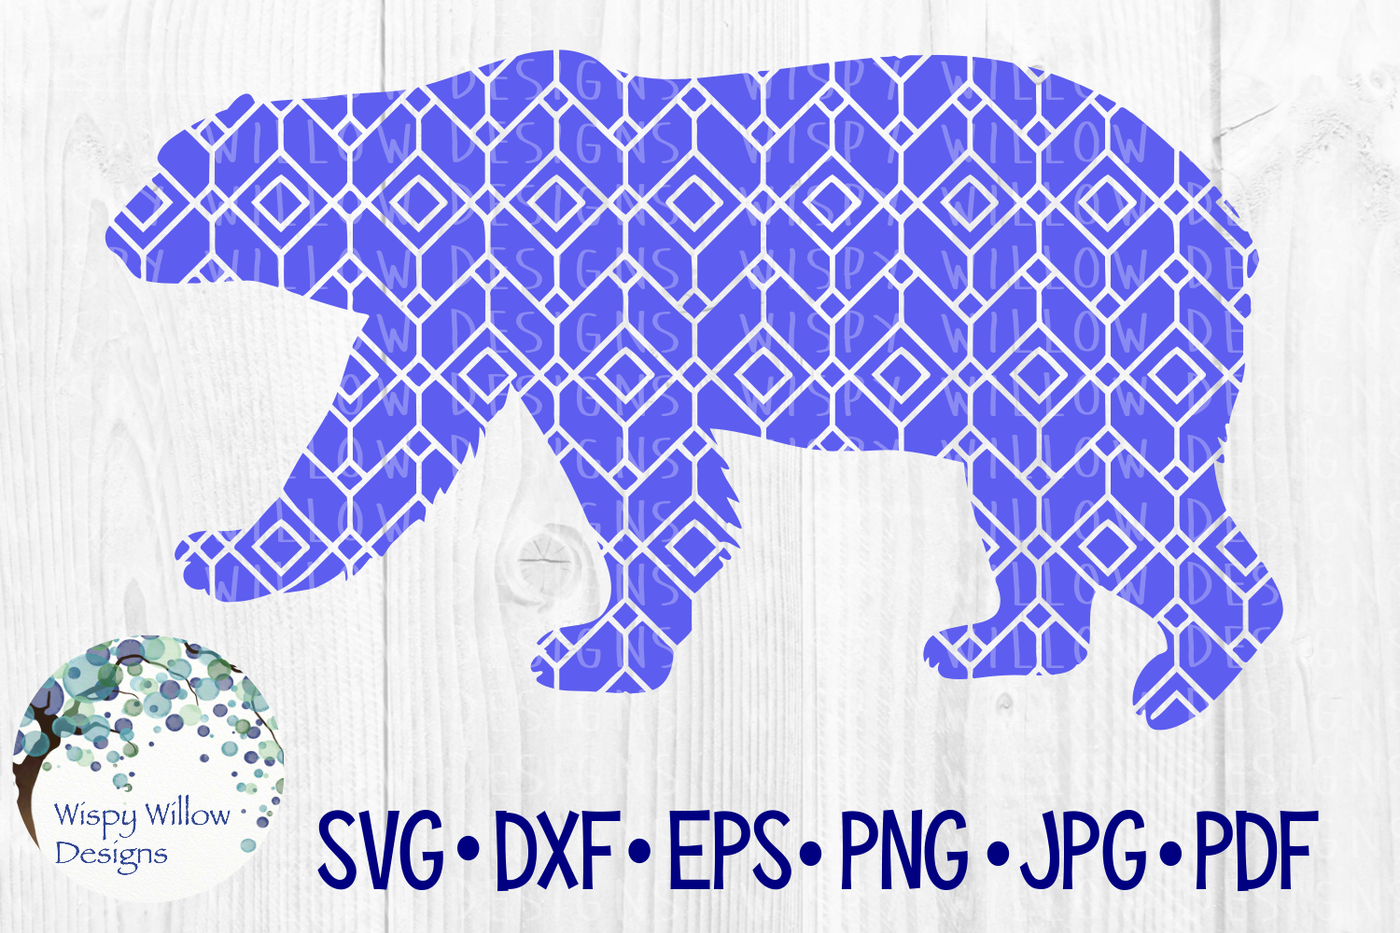 Download Polar Bear Geometric Svg Dxf Eps Png Jpg Pdf By Wispy Willow Designs Thehungryjpeg Com PSD Mockup Templates